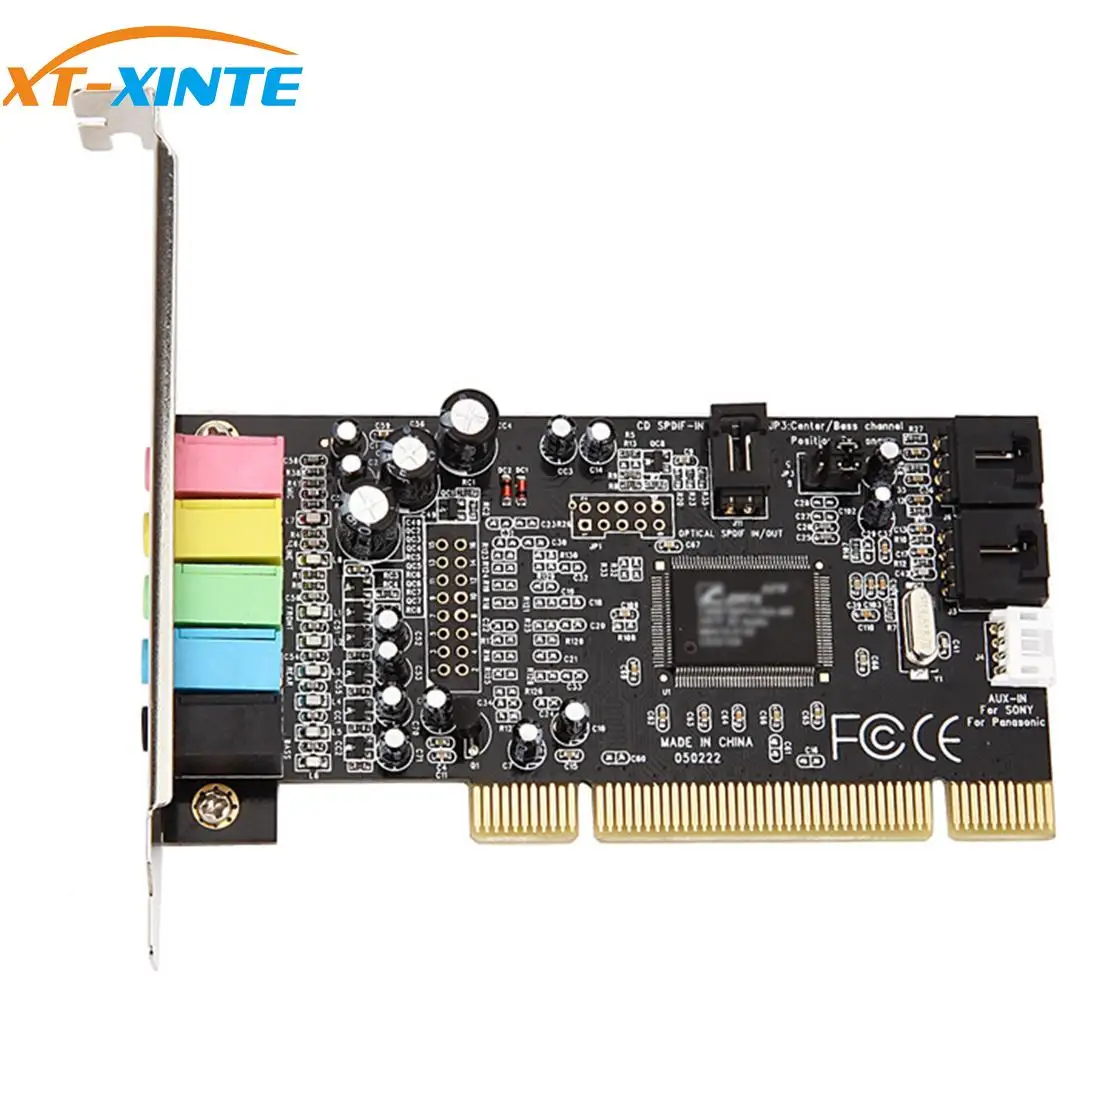 

XT-XINTE PCI Звуковая карта 5,1 каналов 5,1 каналов CMI8738 чипсет аудио интерфейс PCI-Express стерео цифровая карта настольная звуковая карта